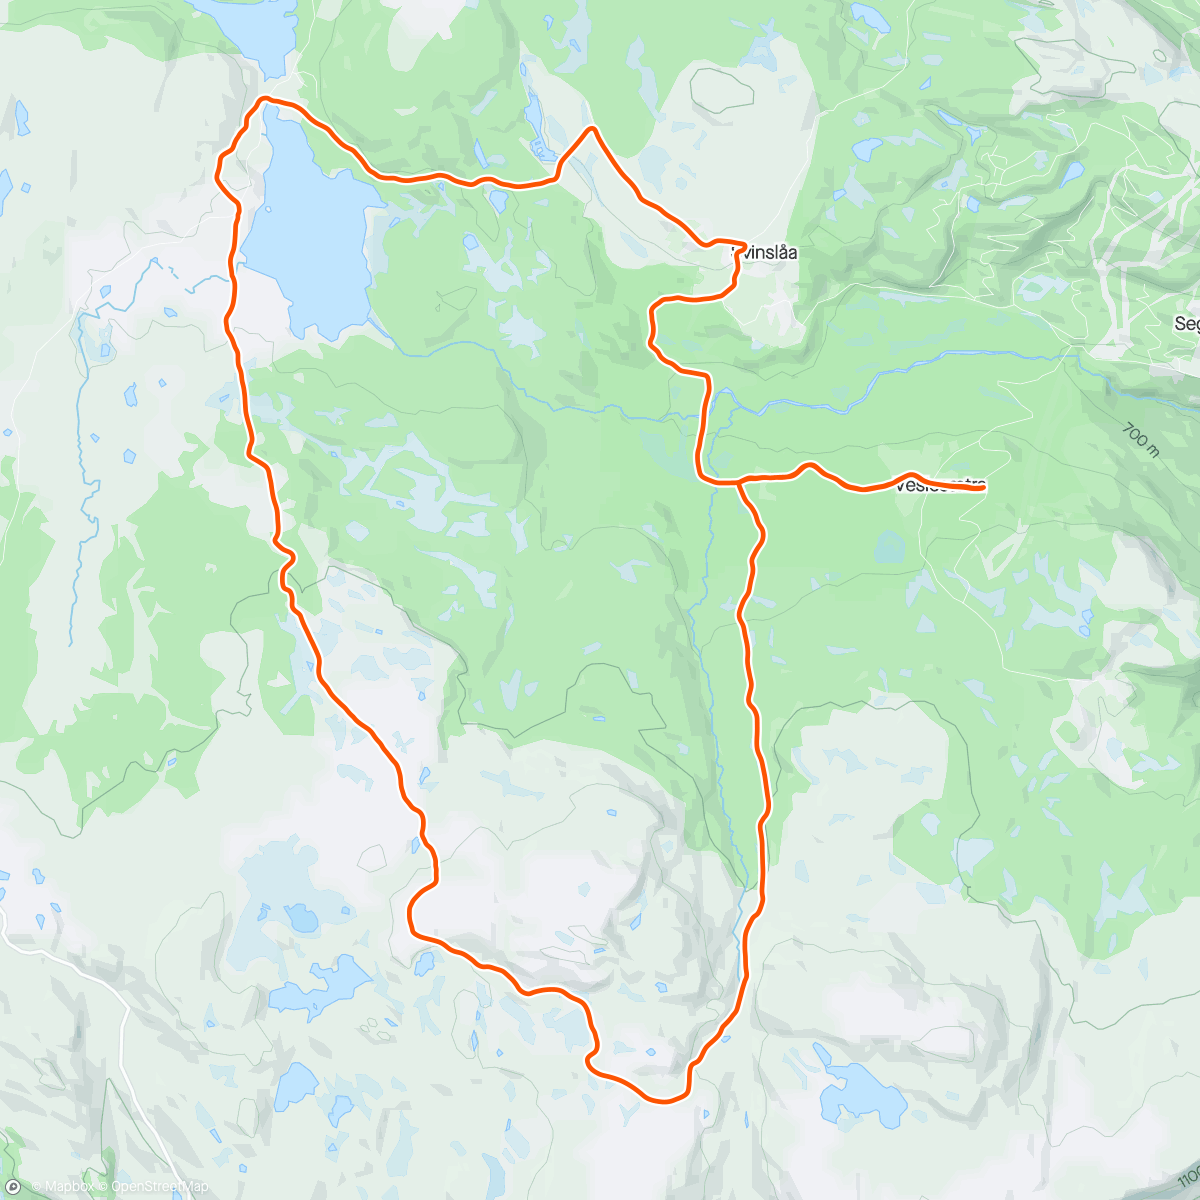 「Svinslåa-Vendalen-Rognhøgda-Skarbua-retur ned Bjørkelia」活動的地圖